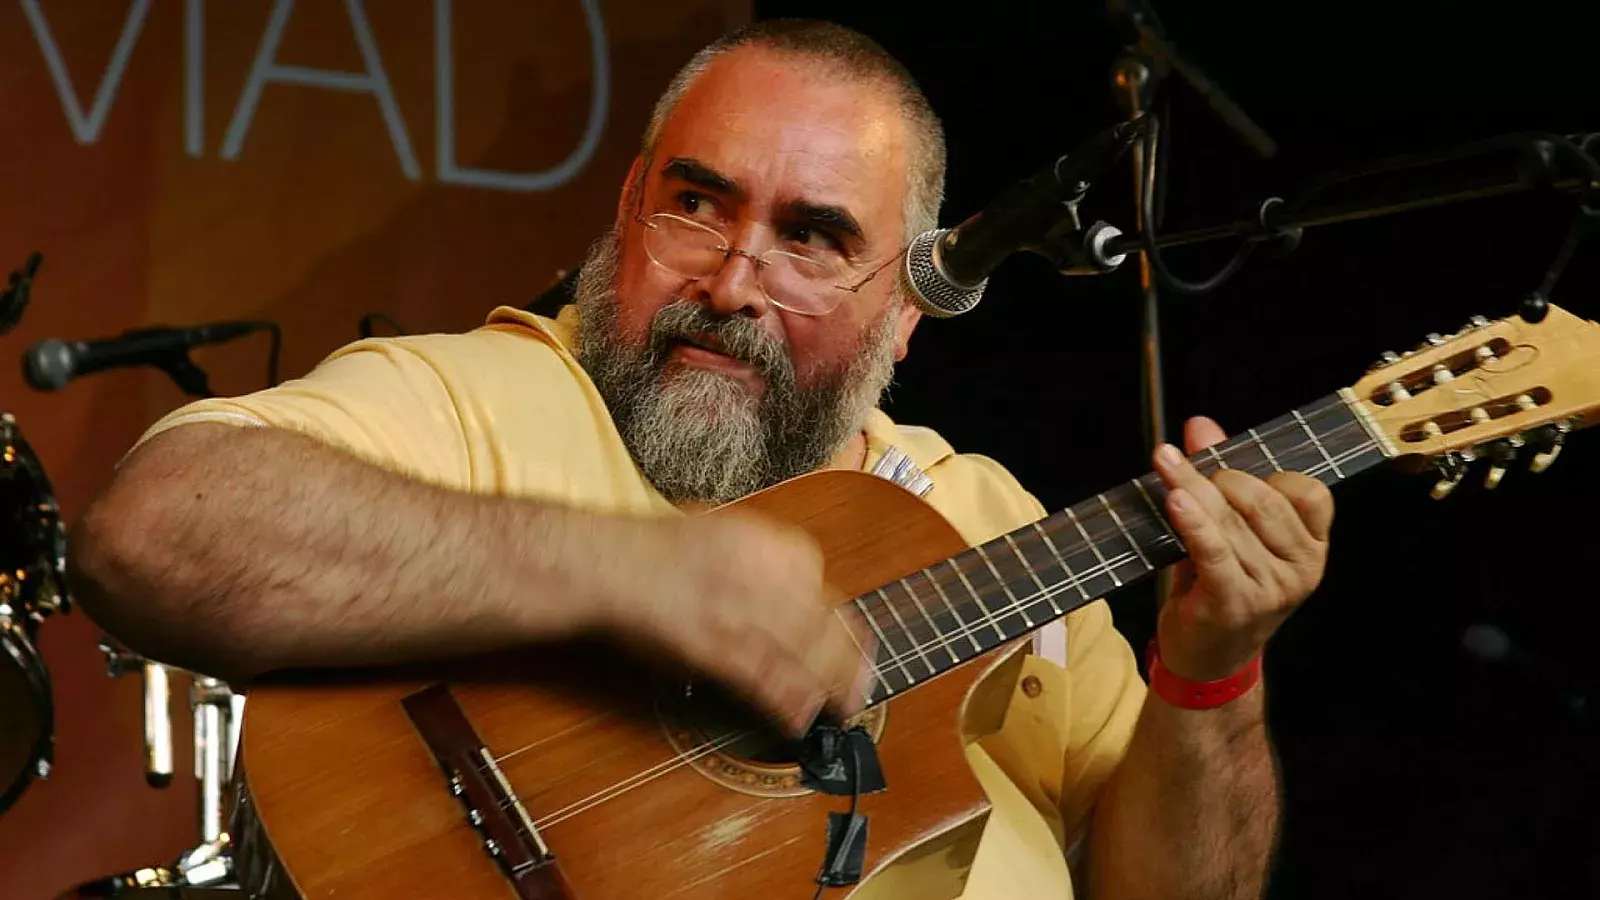 Pedro Luis Ferrer, músico cubano